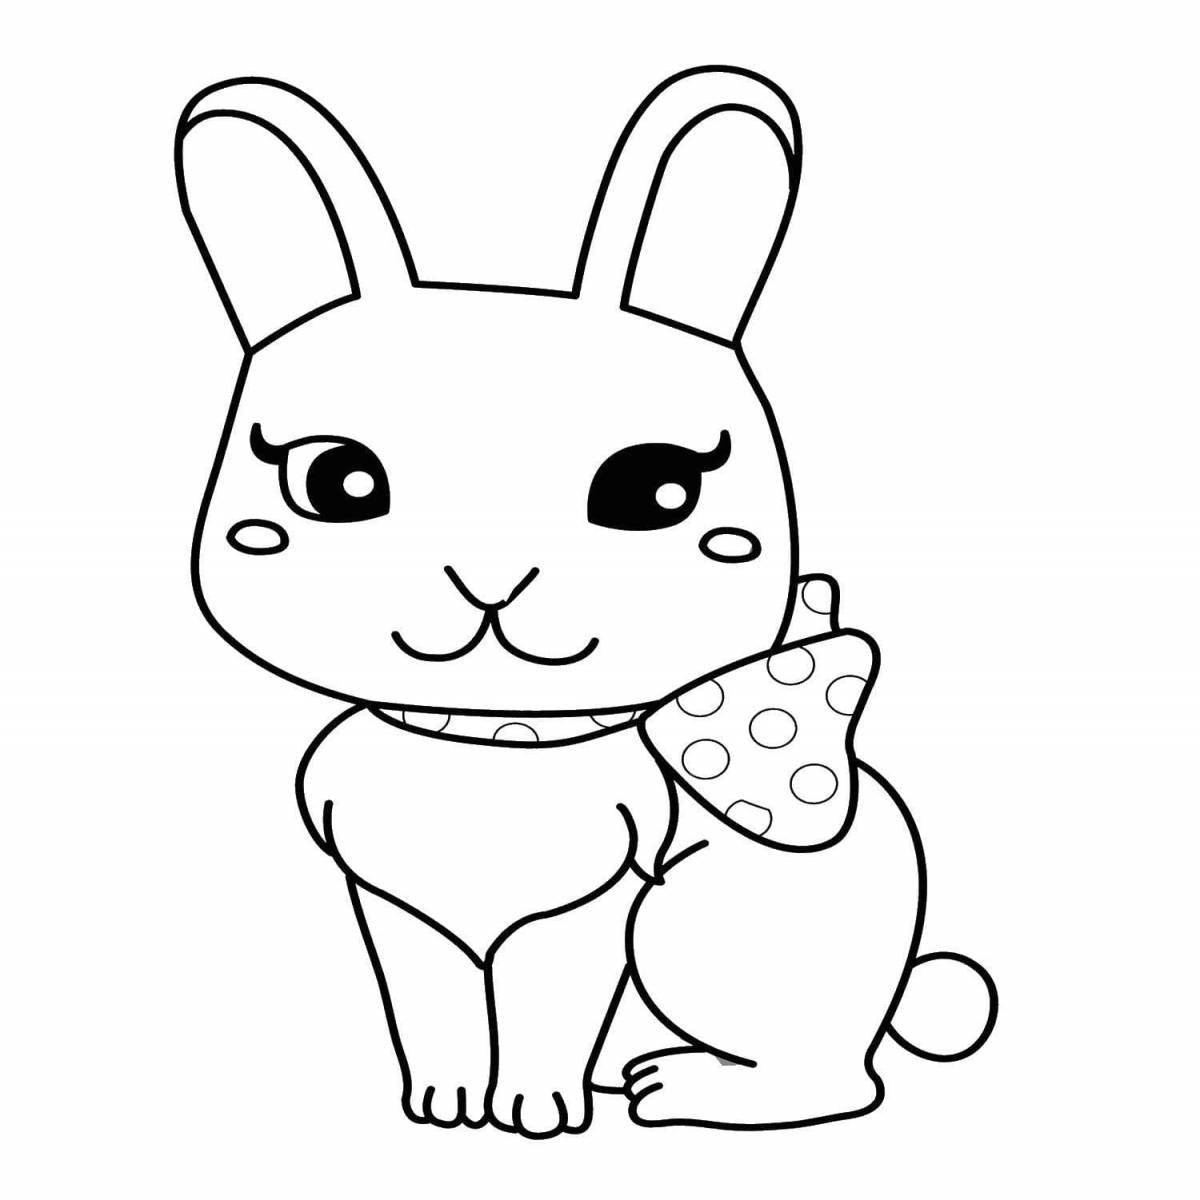 Cute and precious rabbit coloring book